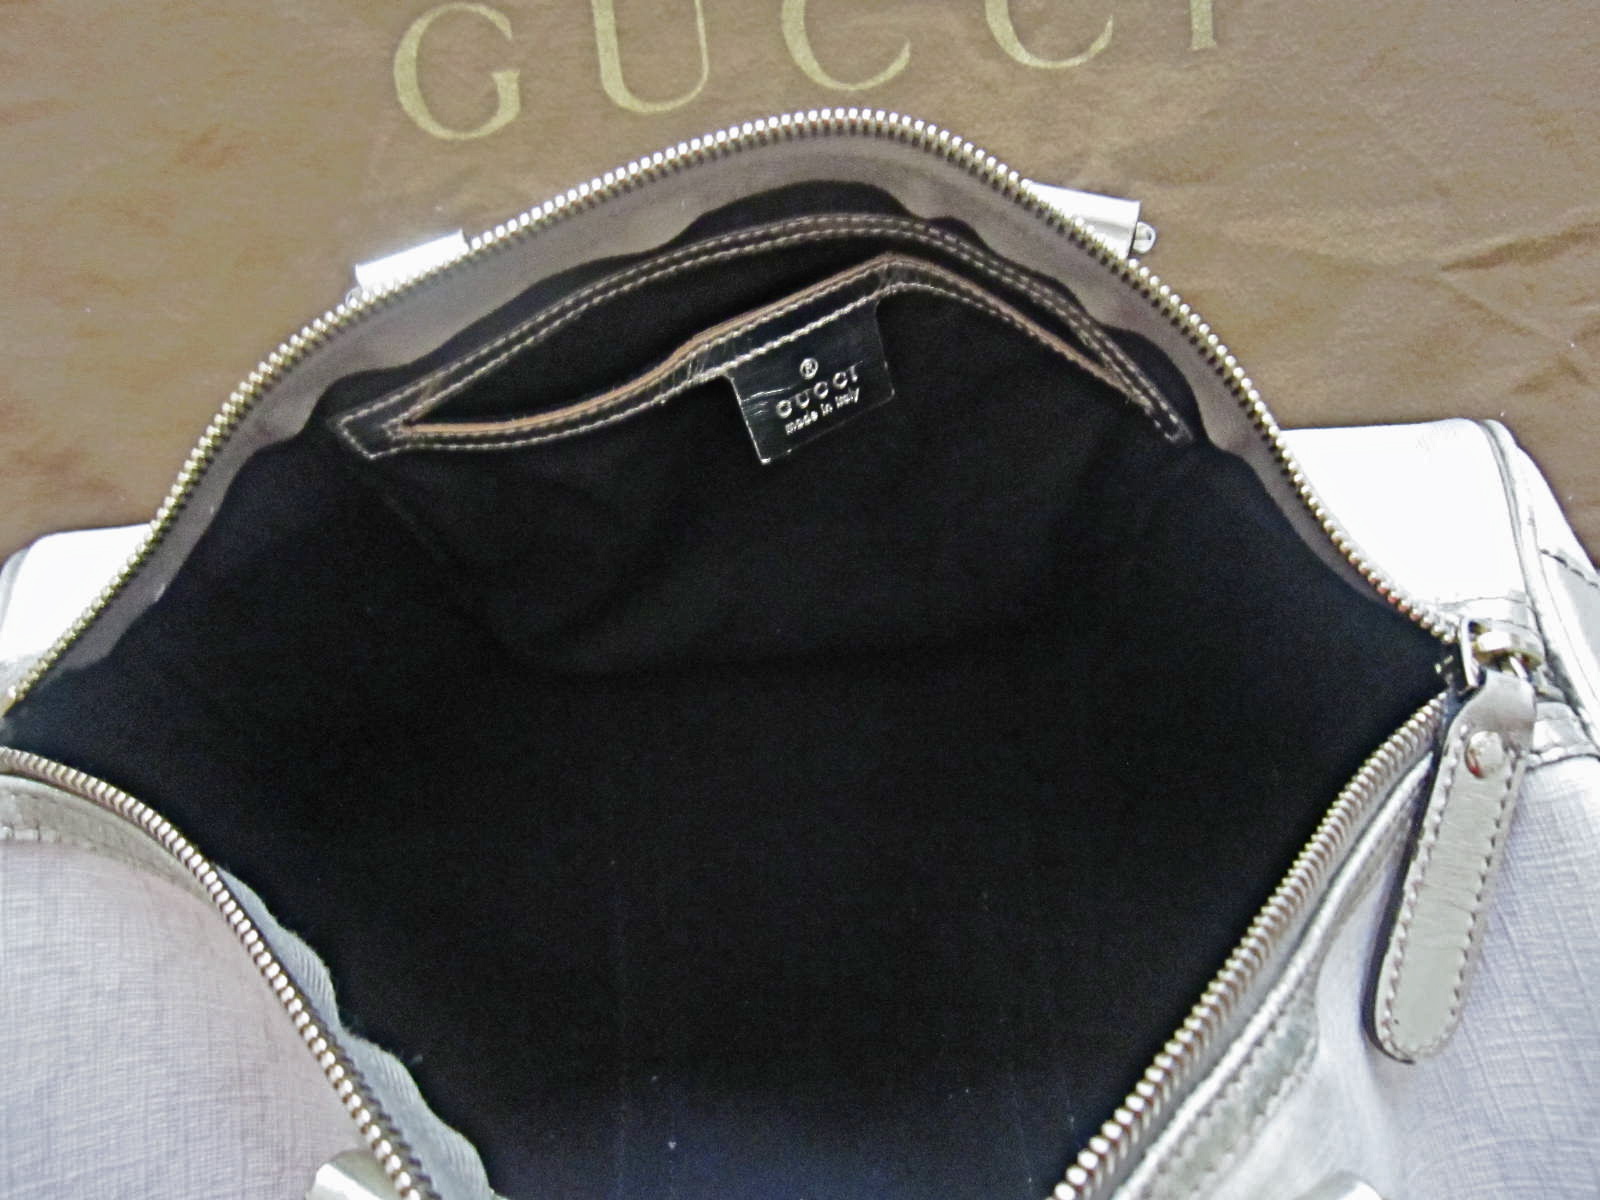 White GG Coated Canvas Gucci Loves NY Medium Boston Bag LTD